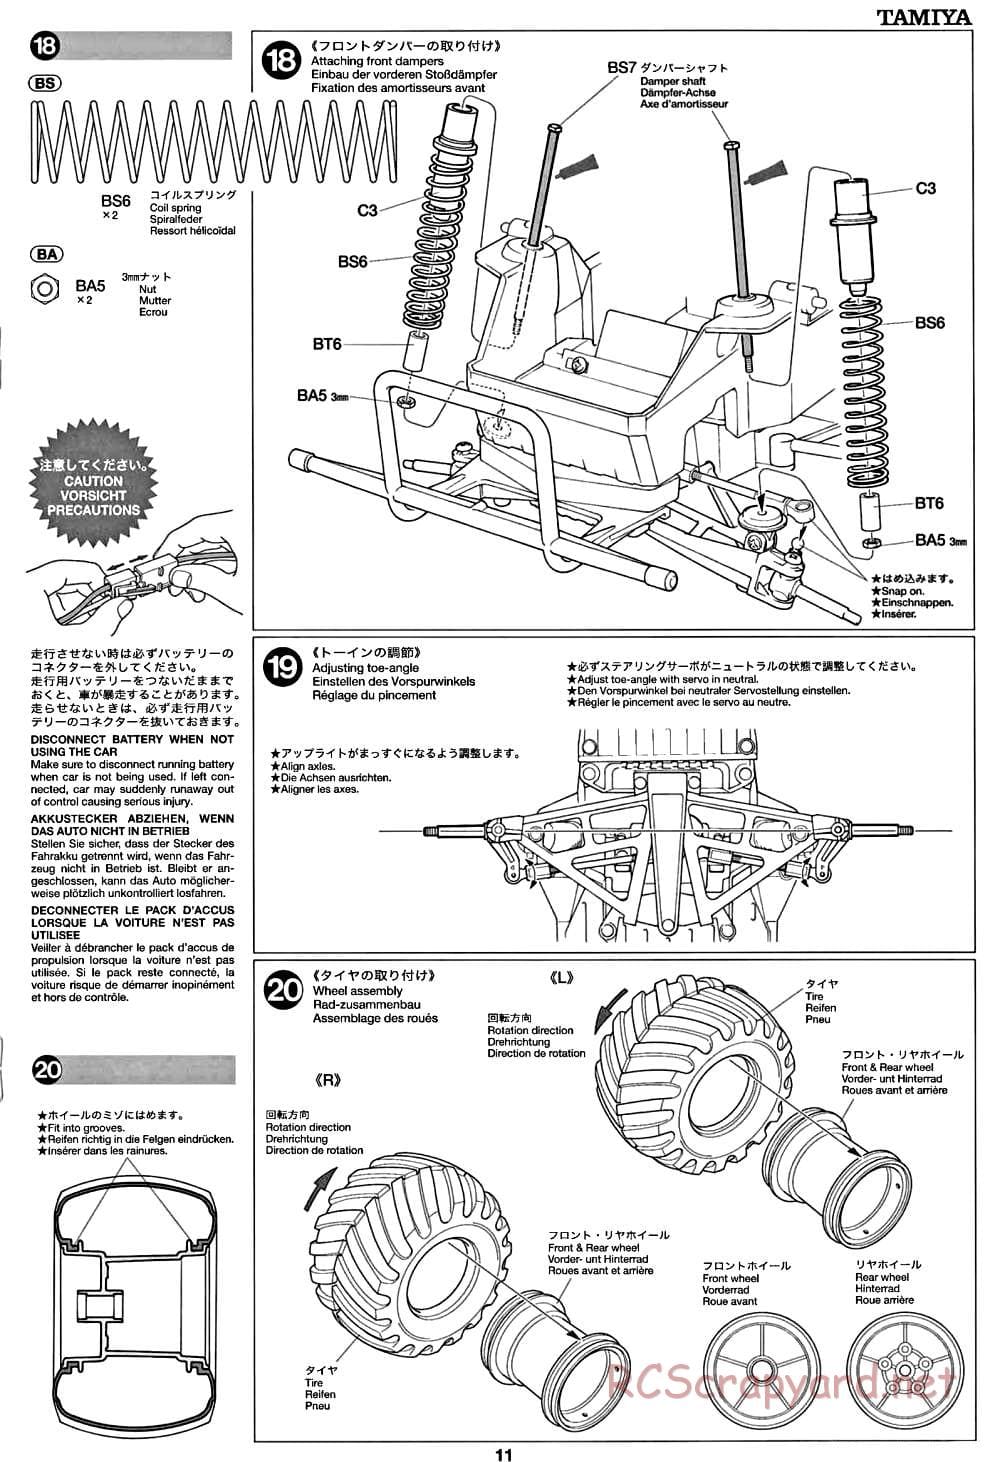 Tamiya - CW-01 Chassis - Manual - Page 11